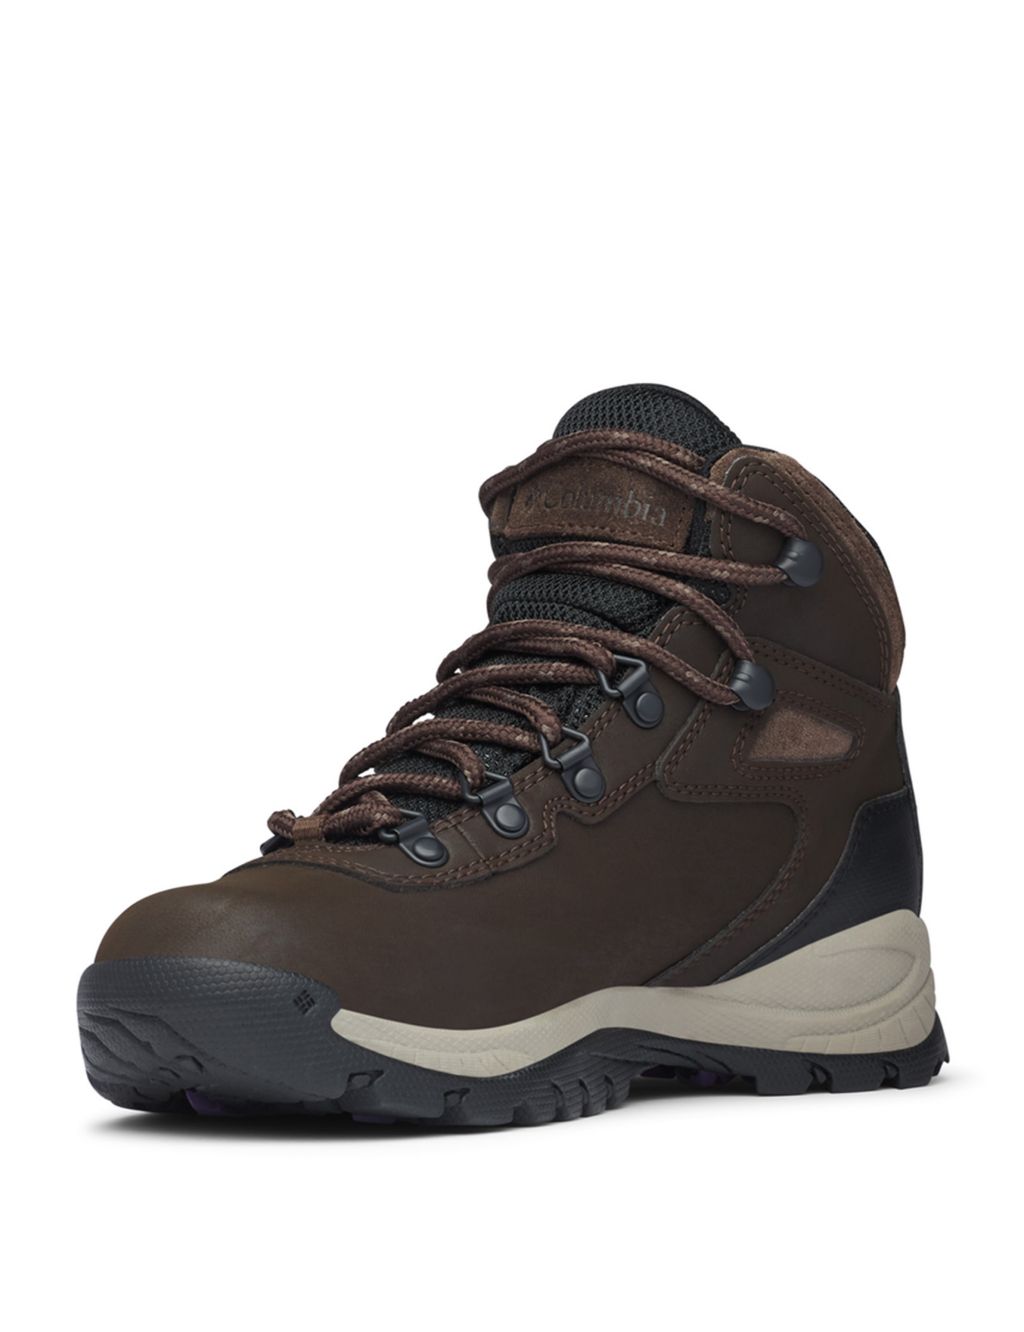 Newton Ridge Plus Leather Walking Boots image 2